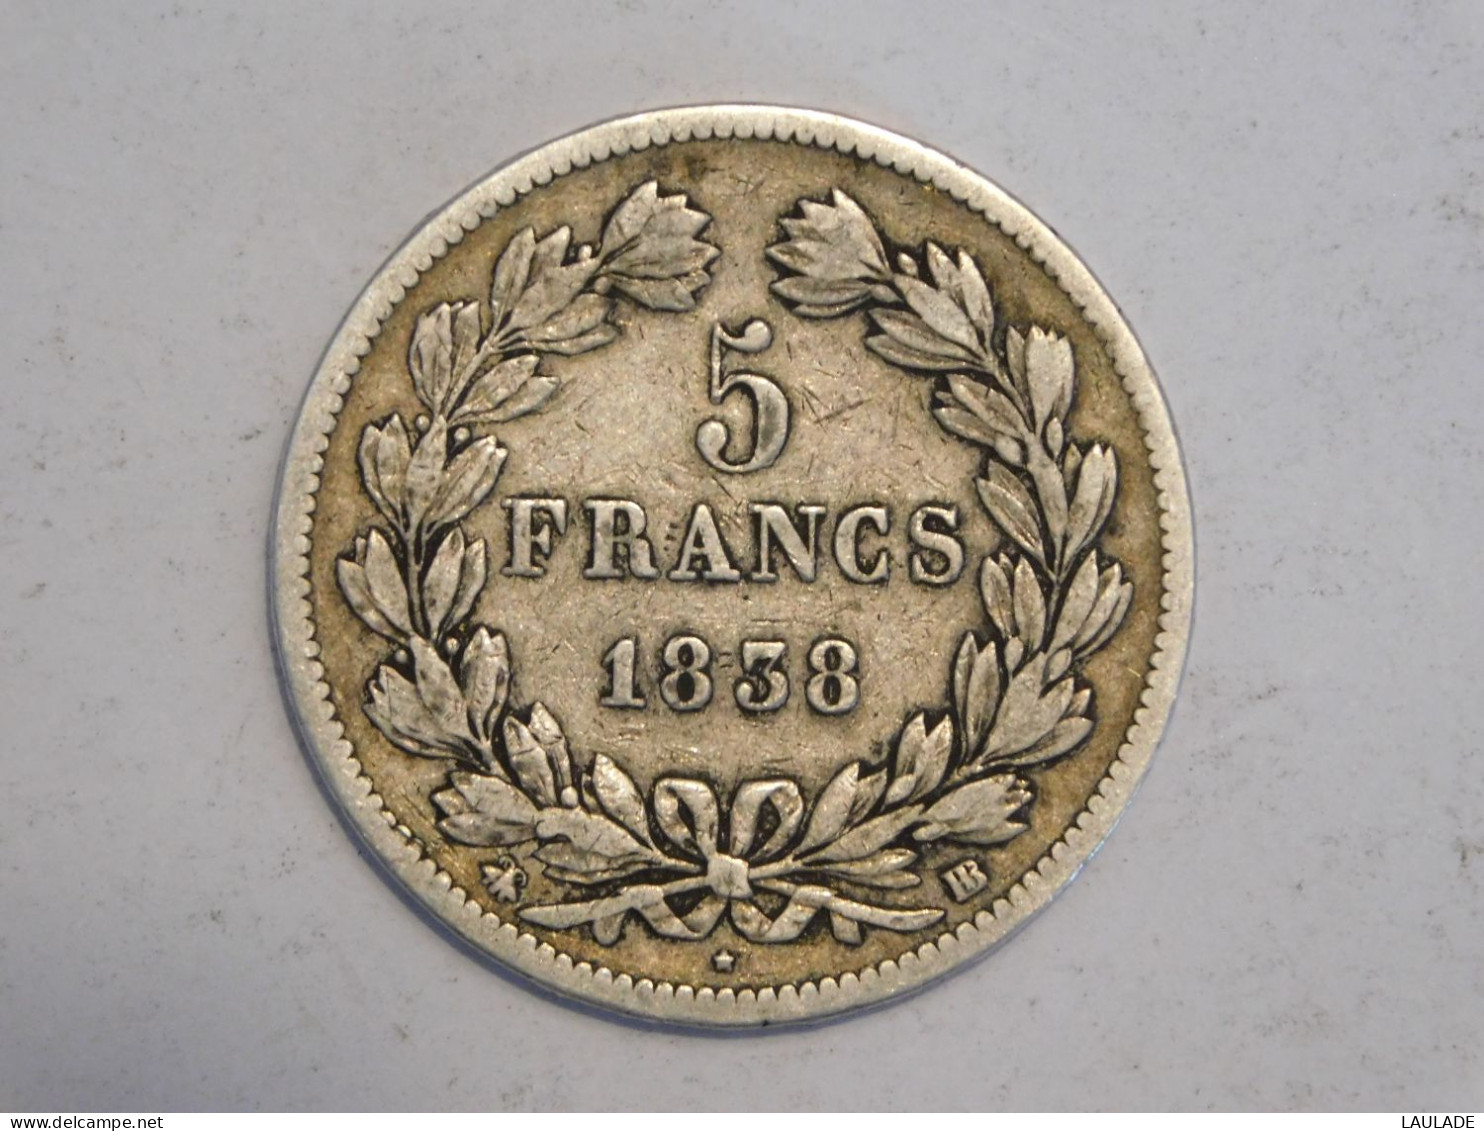 FRANCE 5 Francs 1838 BB - Silver, Argent Franc - 5 Francs